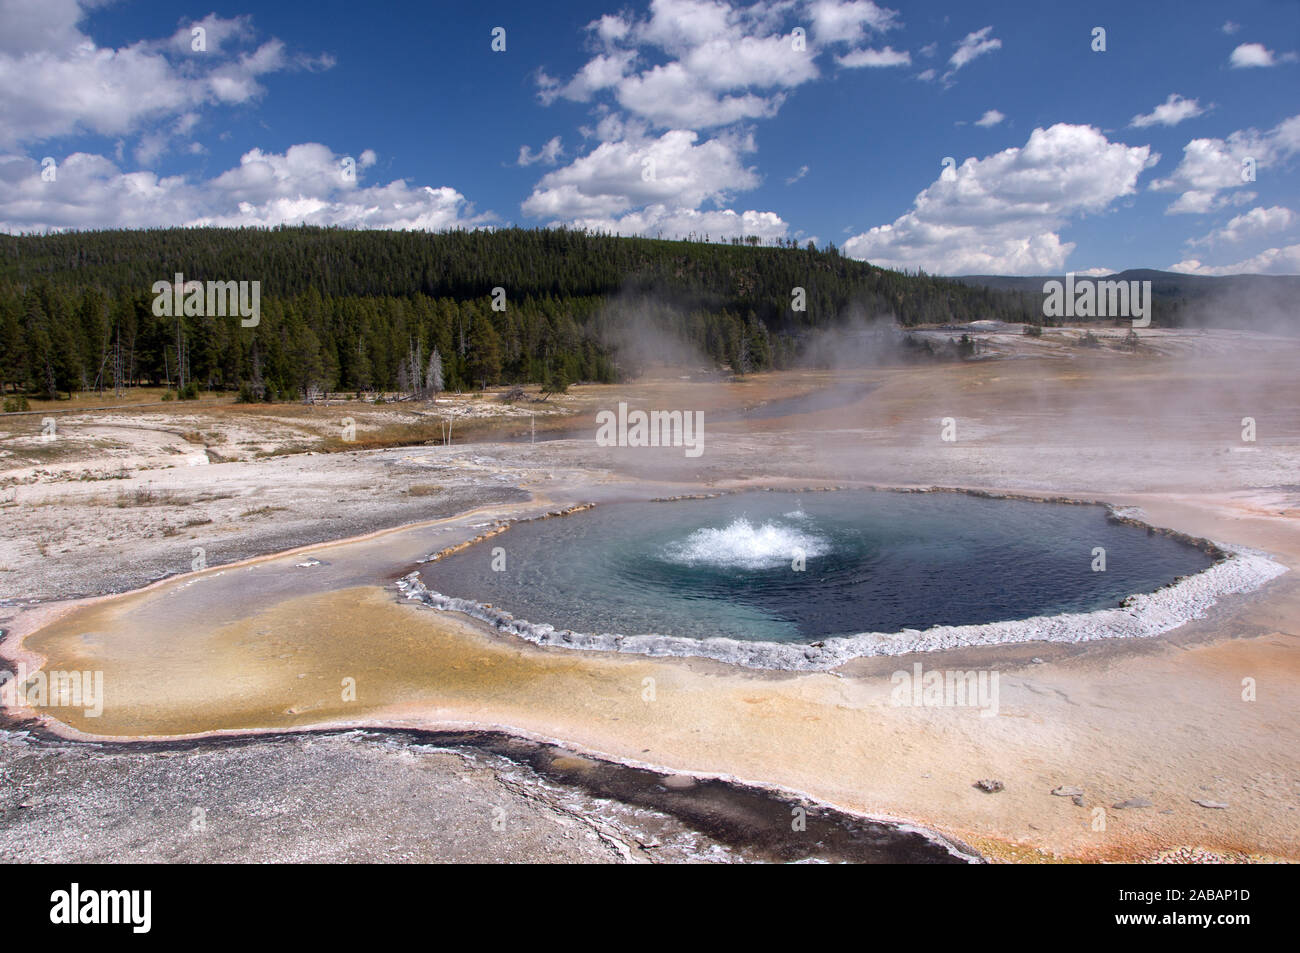 Aufnahme im Nationalpark Yellowstone, Utah, Stati Uniti d'America, IM OKTOBER. Foto Stock